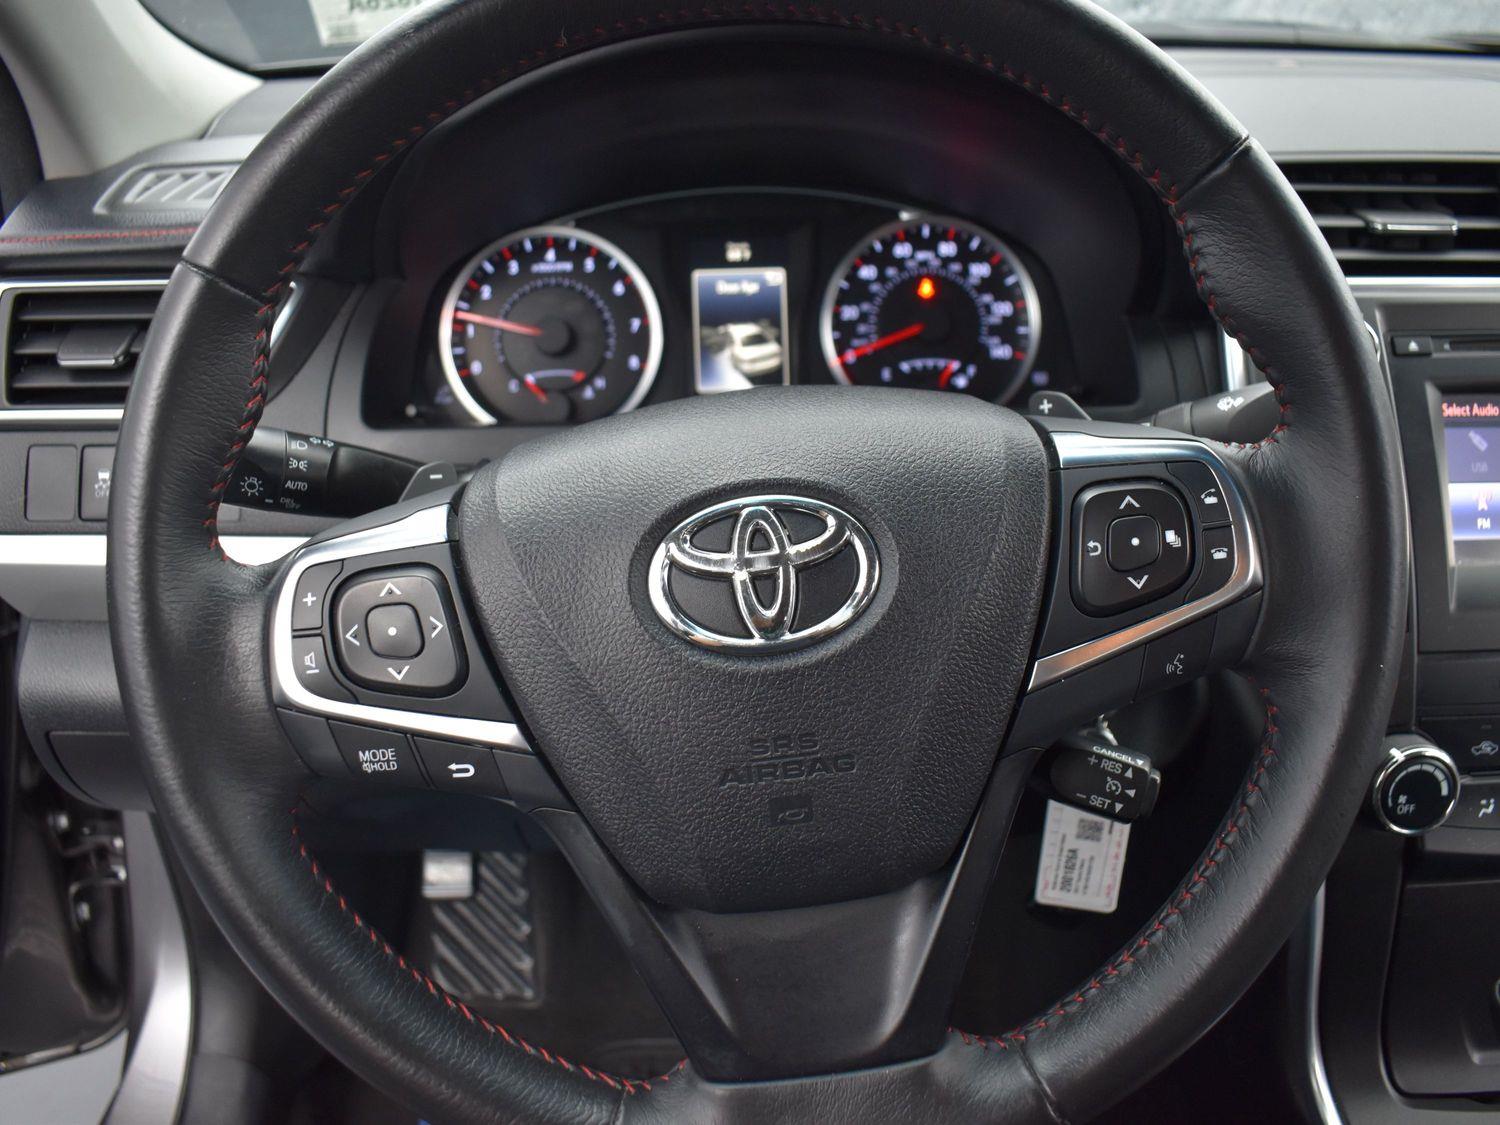 Used 2017 Toyota Camry SE Sedan for sale in Grand Island NE